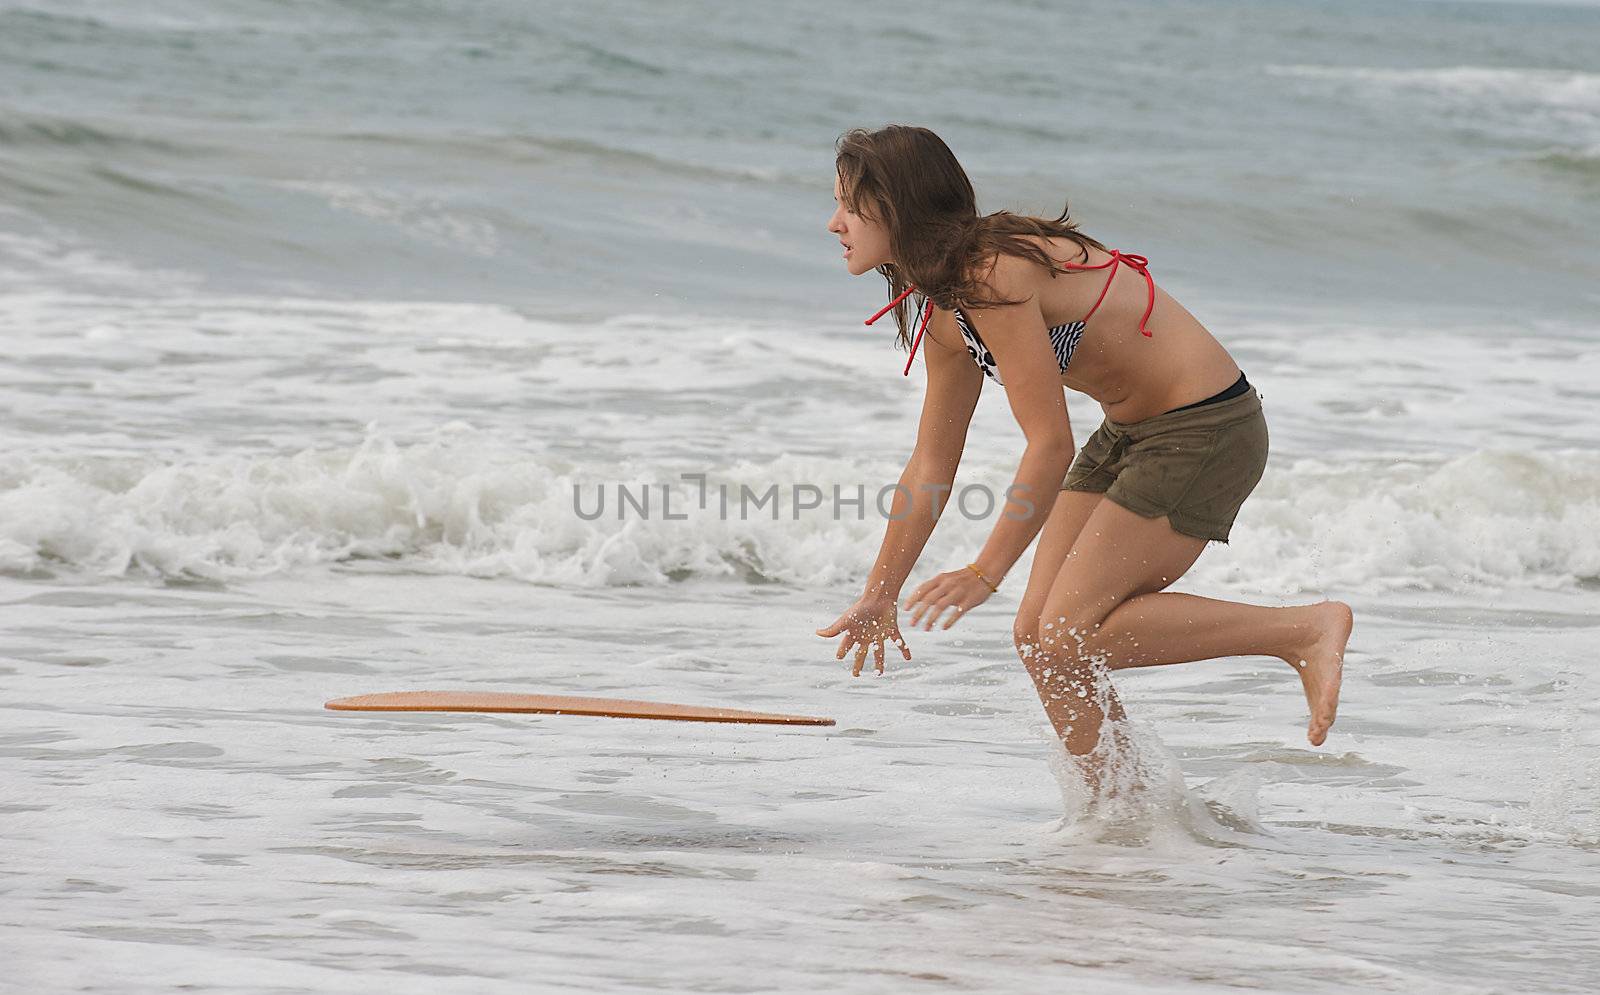 Athletic teen girl throwing skim board into surf at the beach in Emerald Isle, North Carolina.